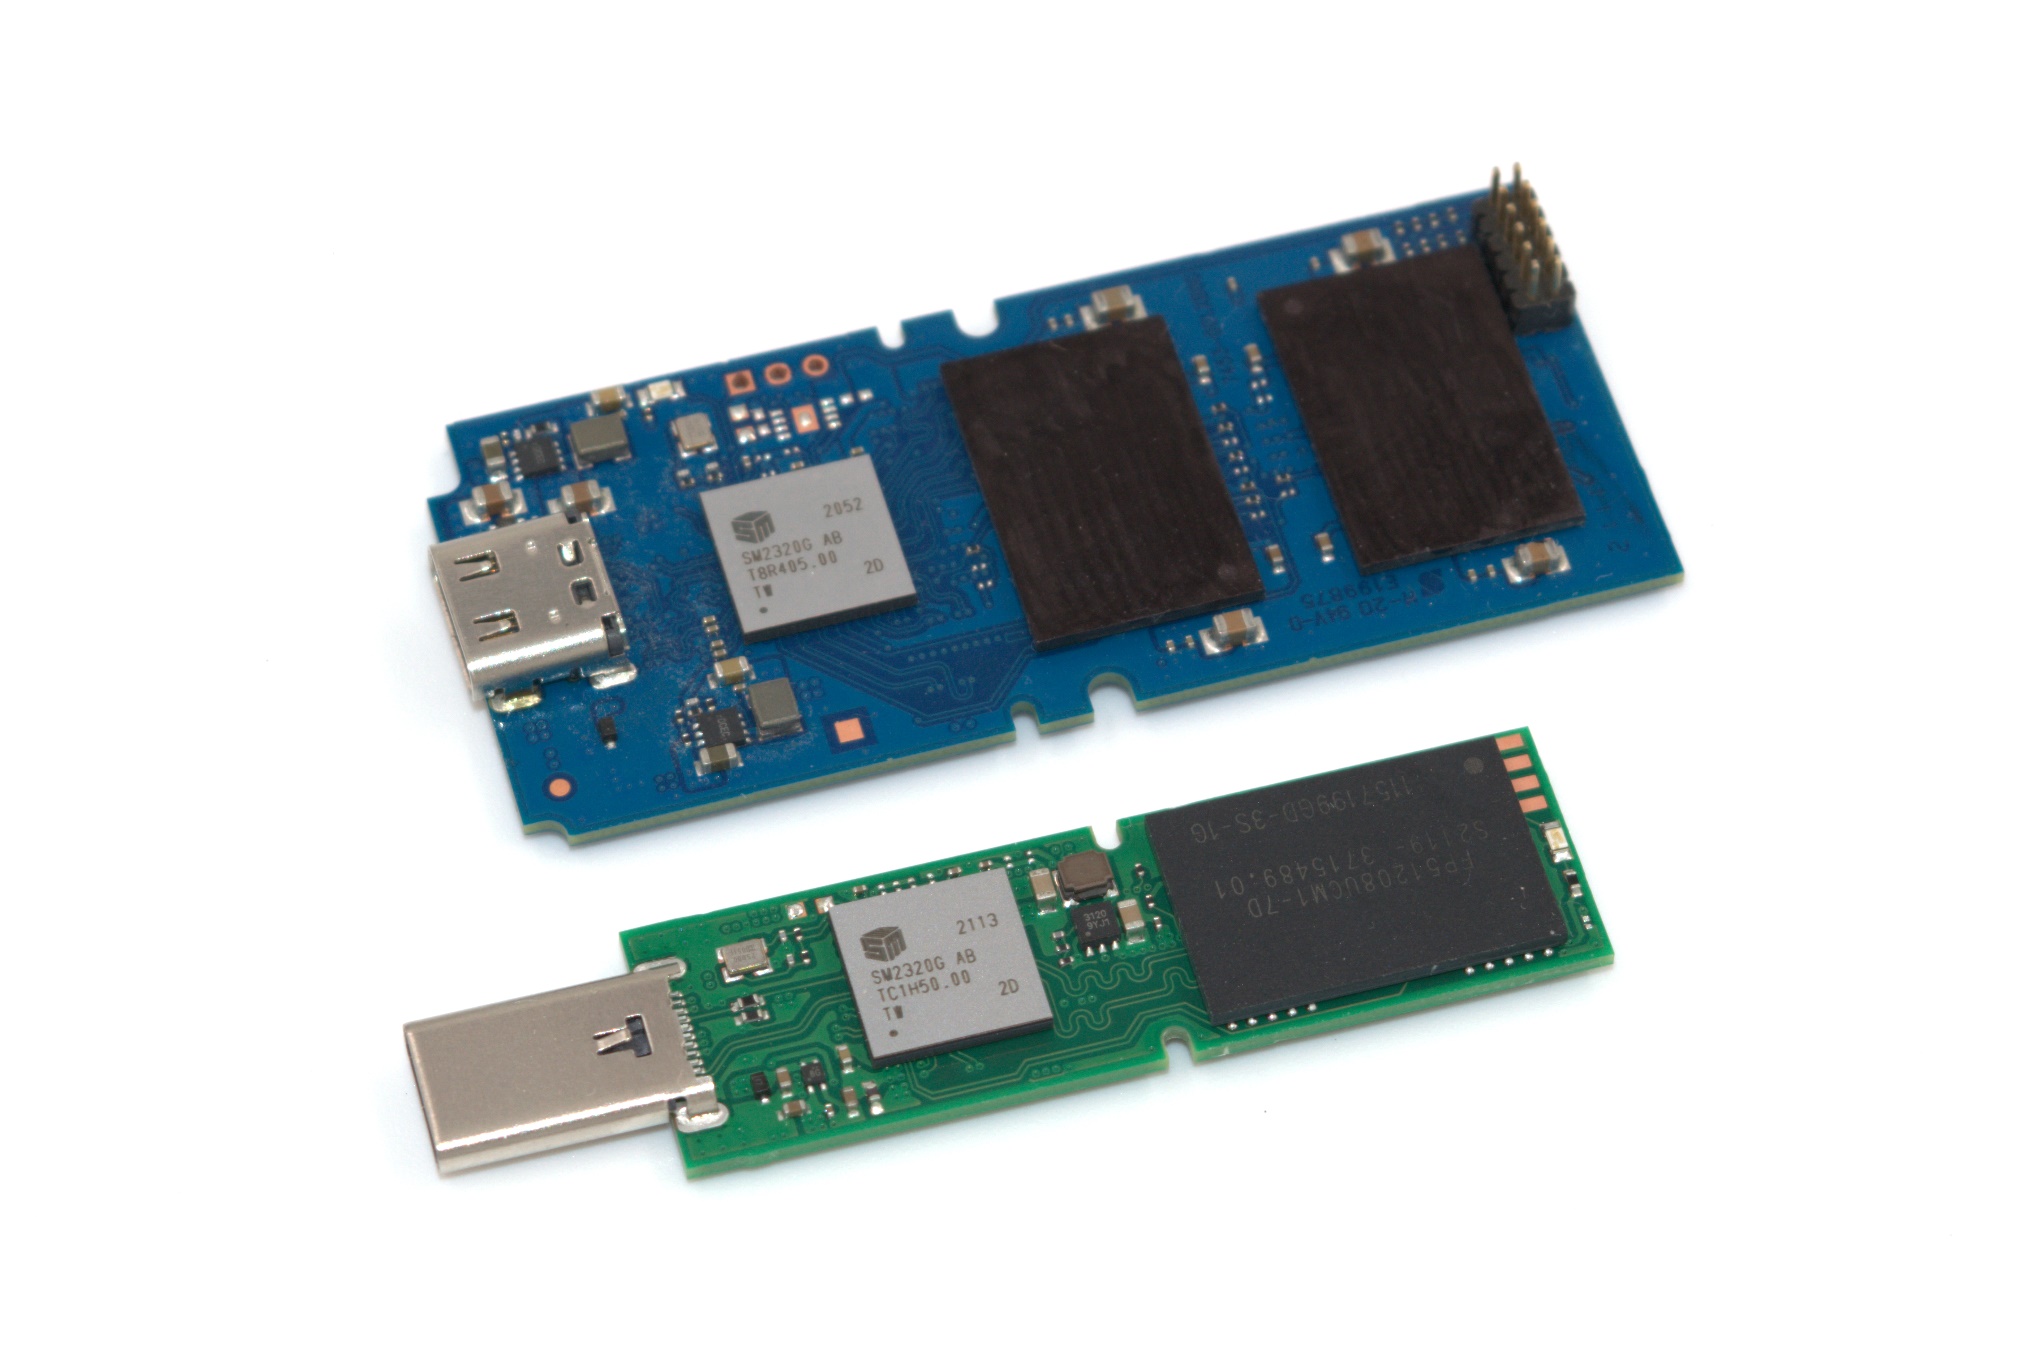 Kingston DataTraveler Max 512GB USB-C Flash Drive with USB 3.2 Gen 2 Performance